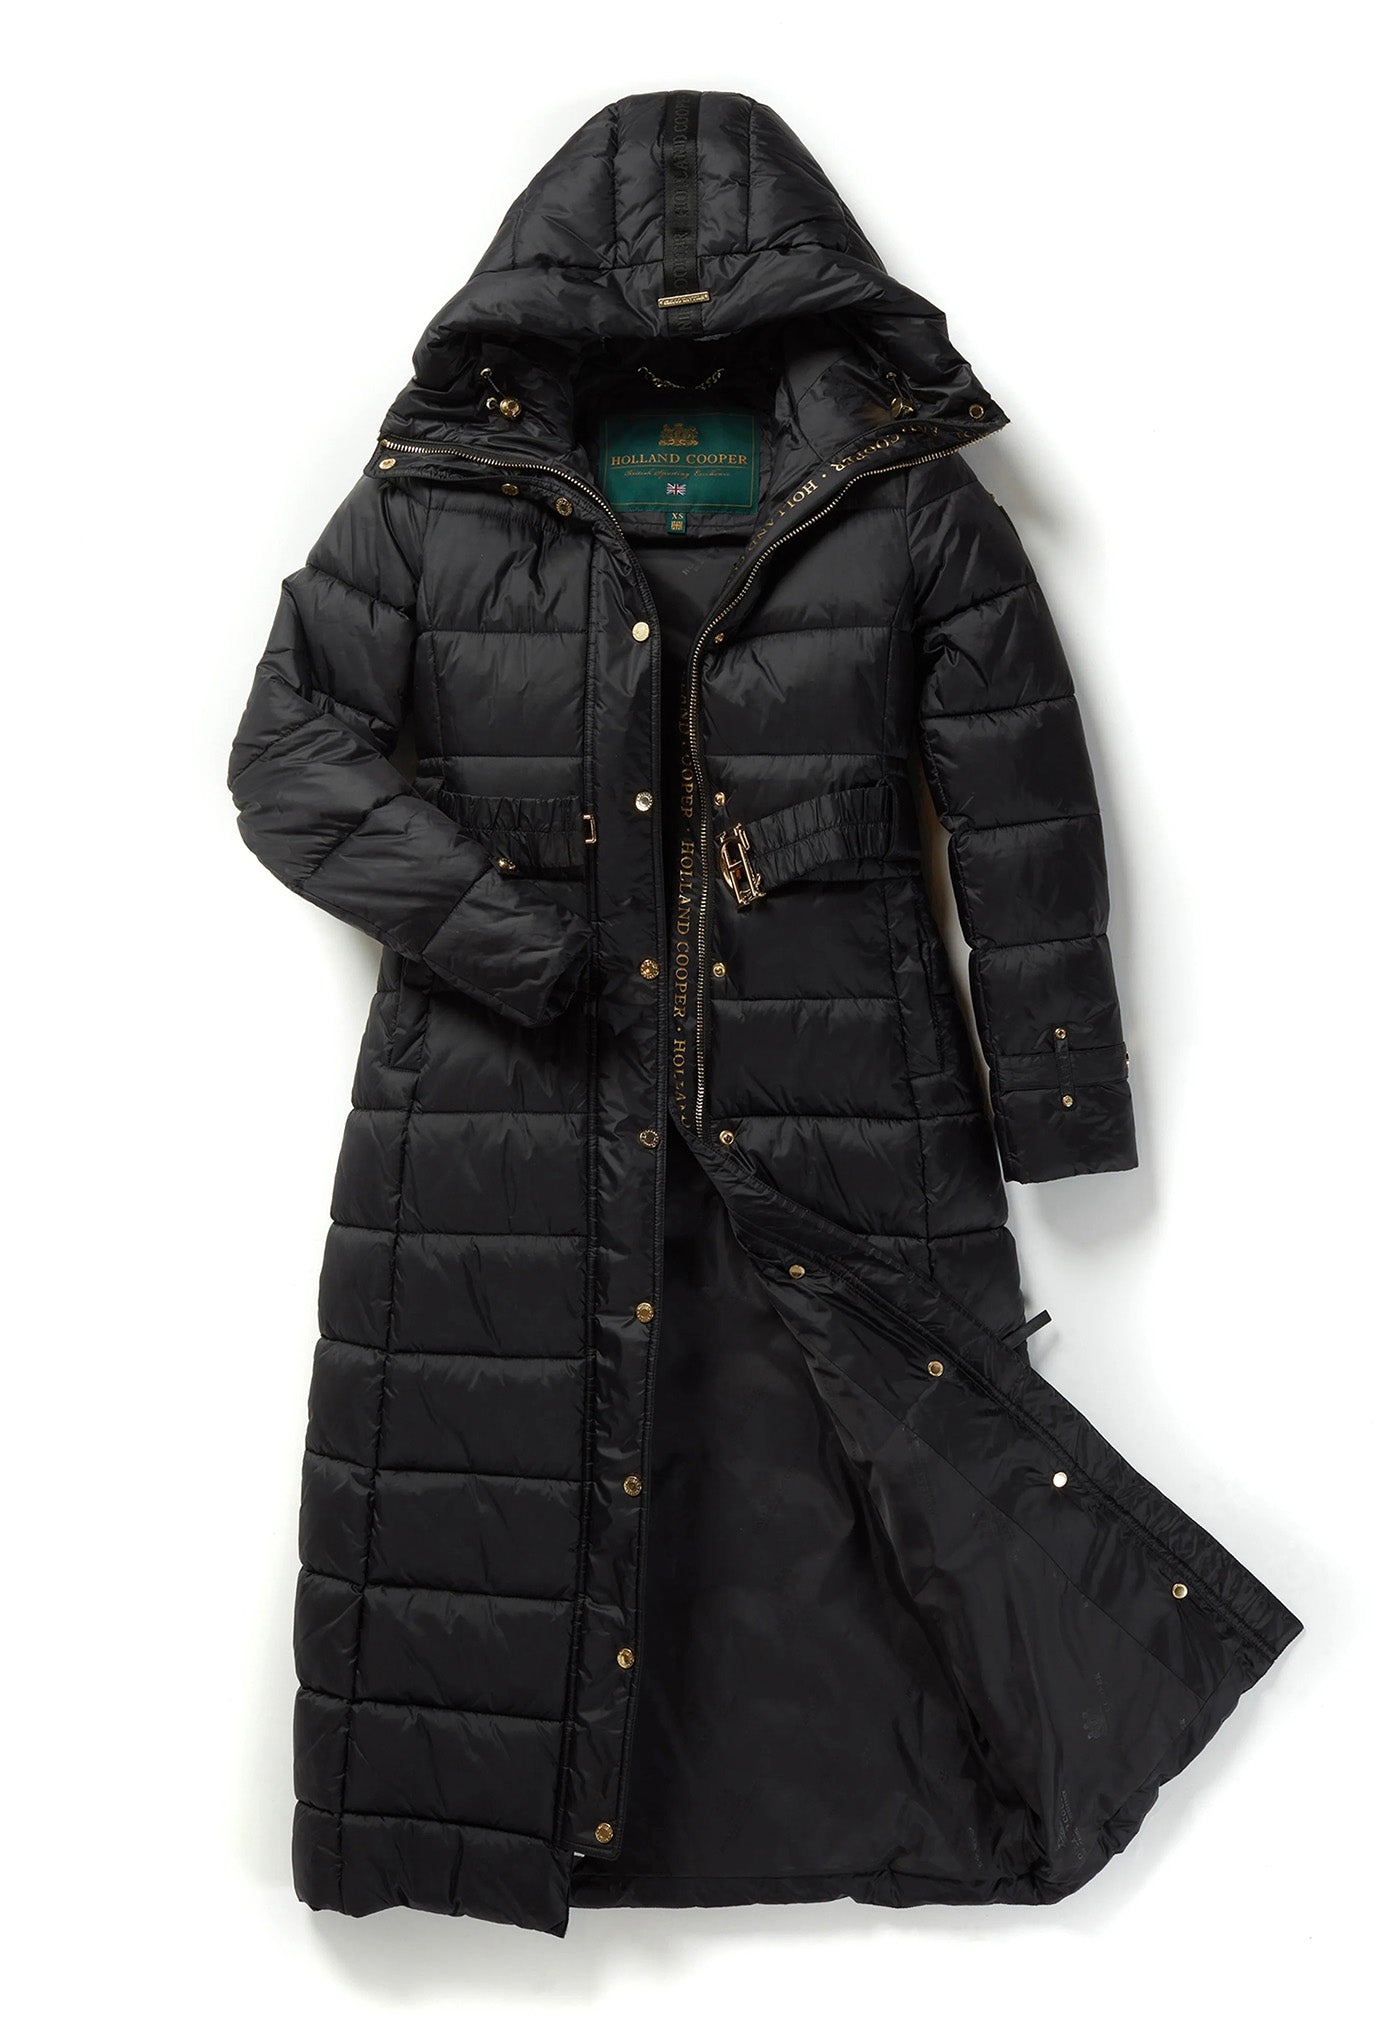 Arosa Coat - Black sold by Angel Divine